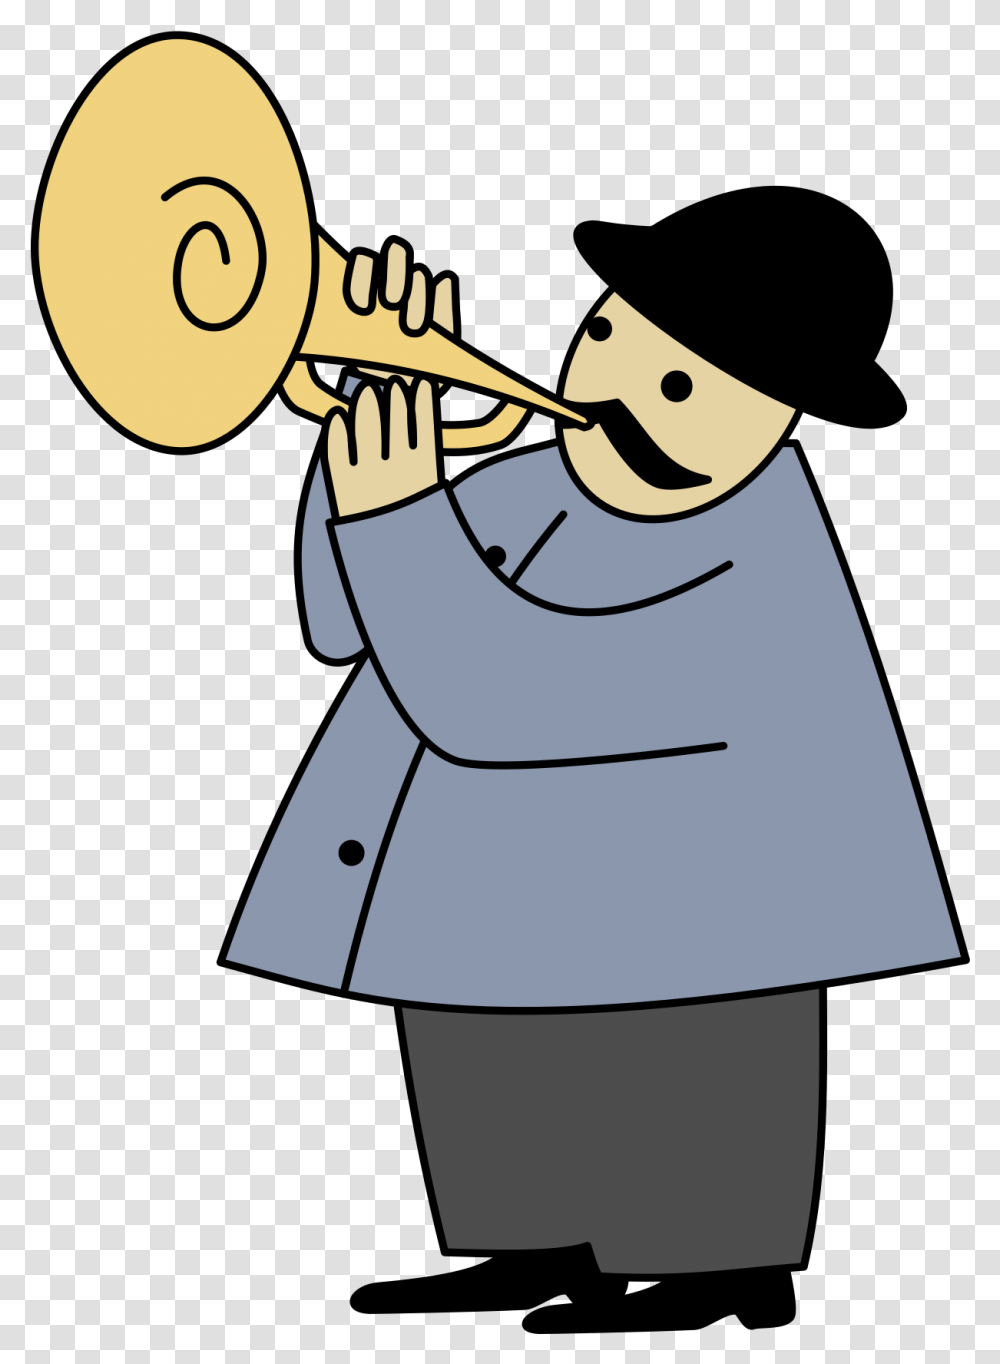 Band Free Fiddler 2 Free Horner Trumpet Player Clip Art, Musical Instrument, Key, Brass Section, Cornet Transparent Png